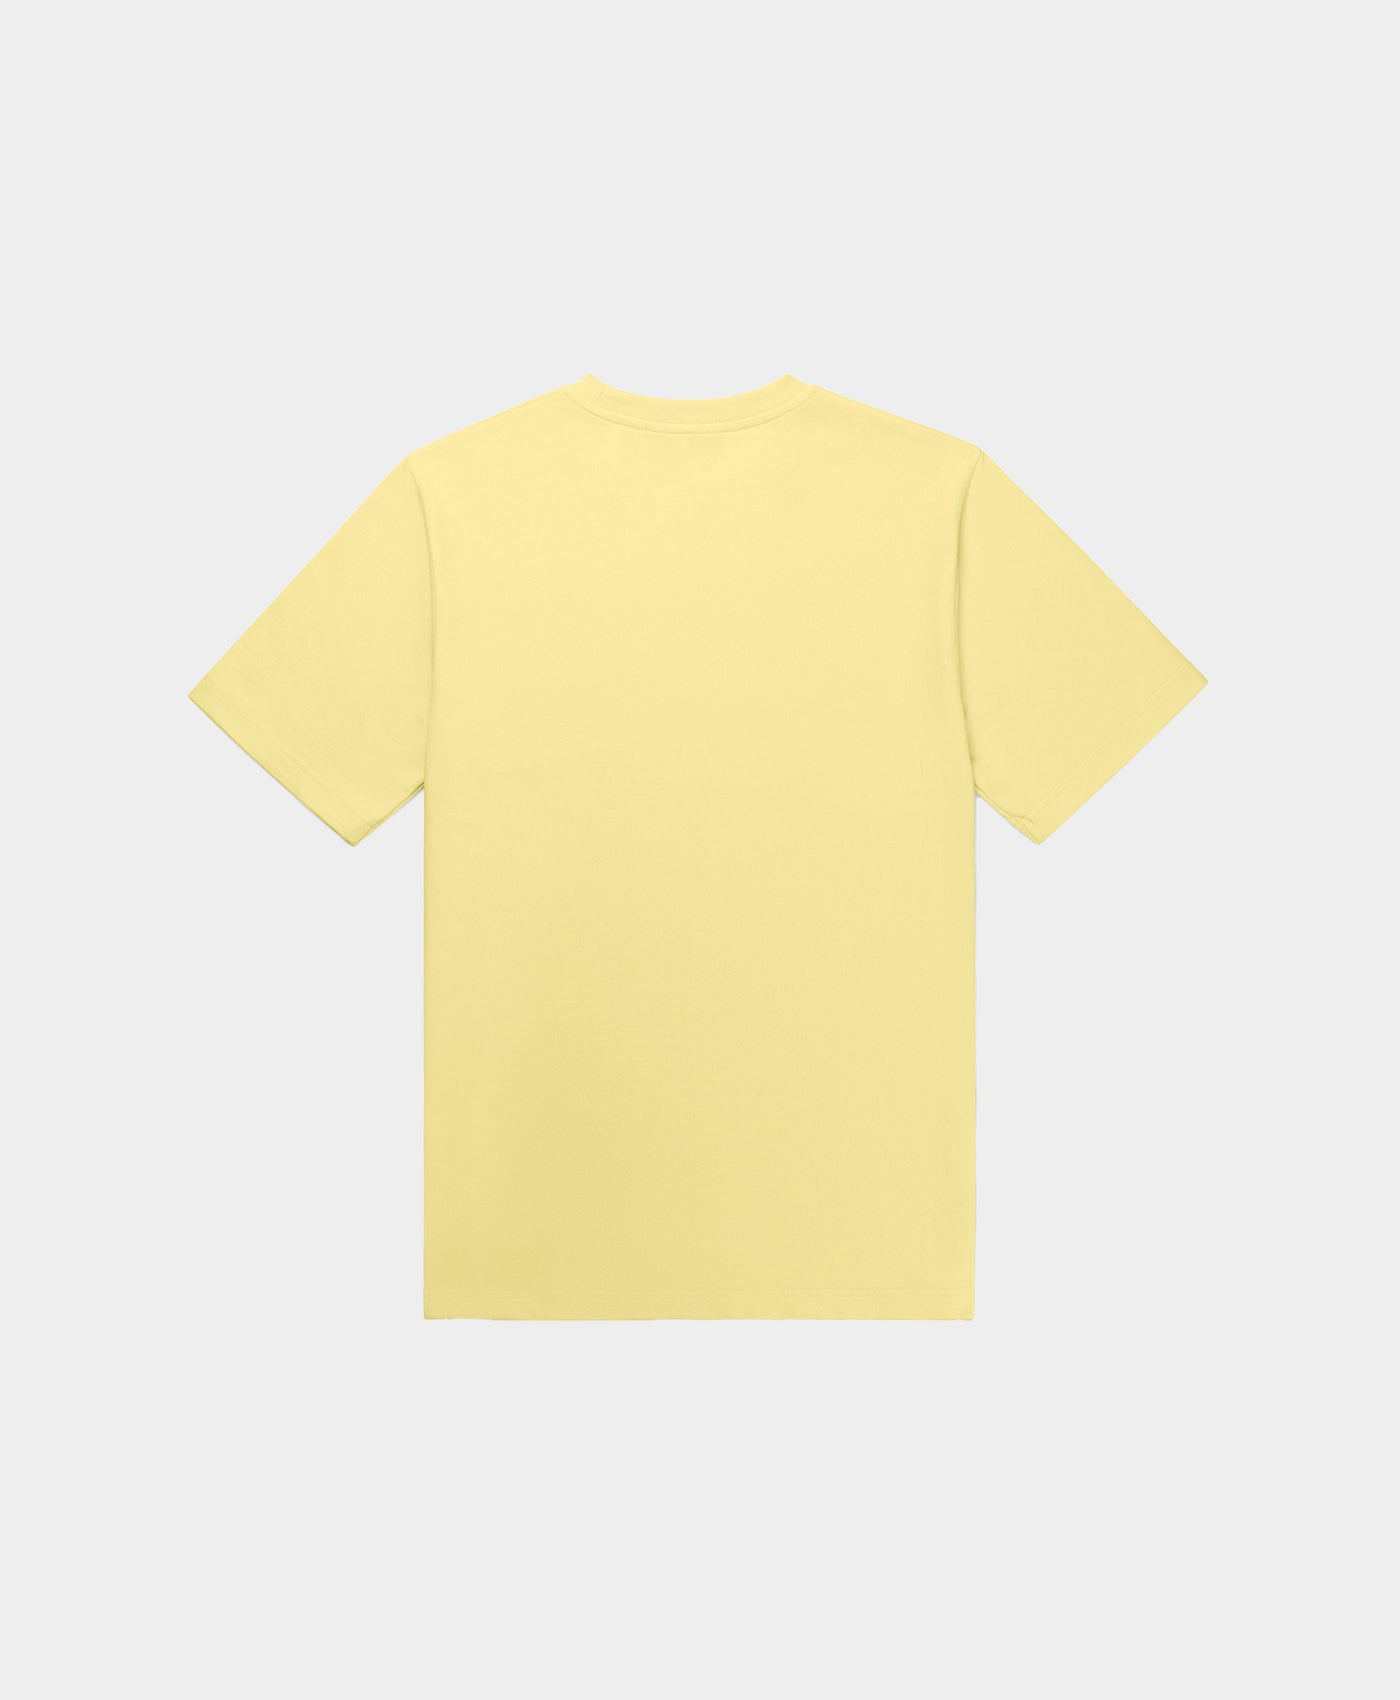 DP - Pineapple Yellow Refarid T-Shirt - Packshot - Rear